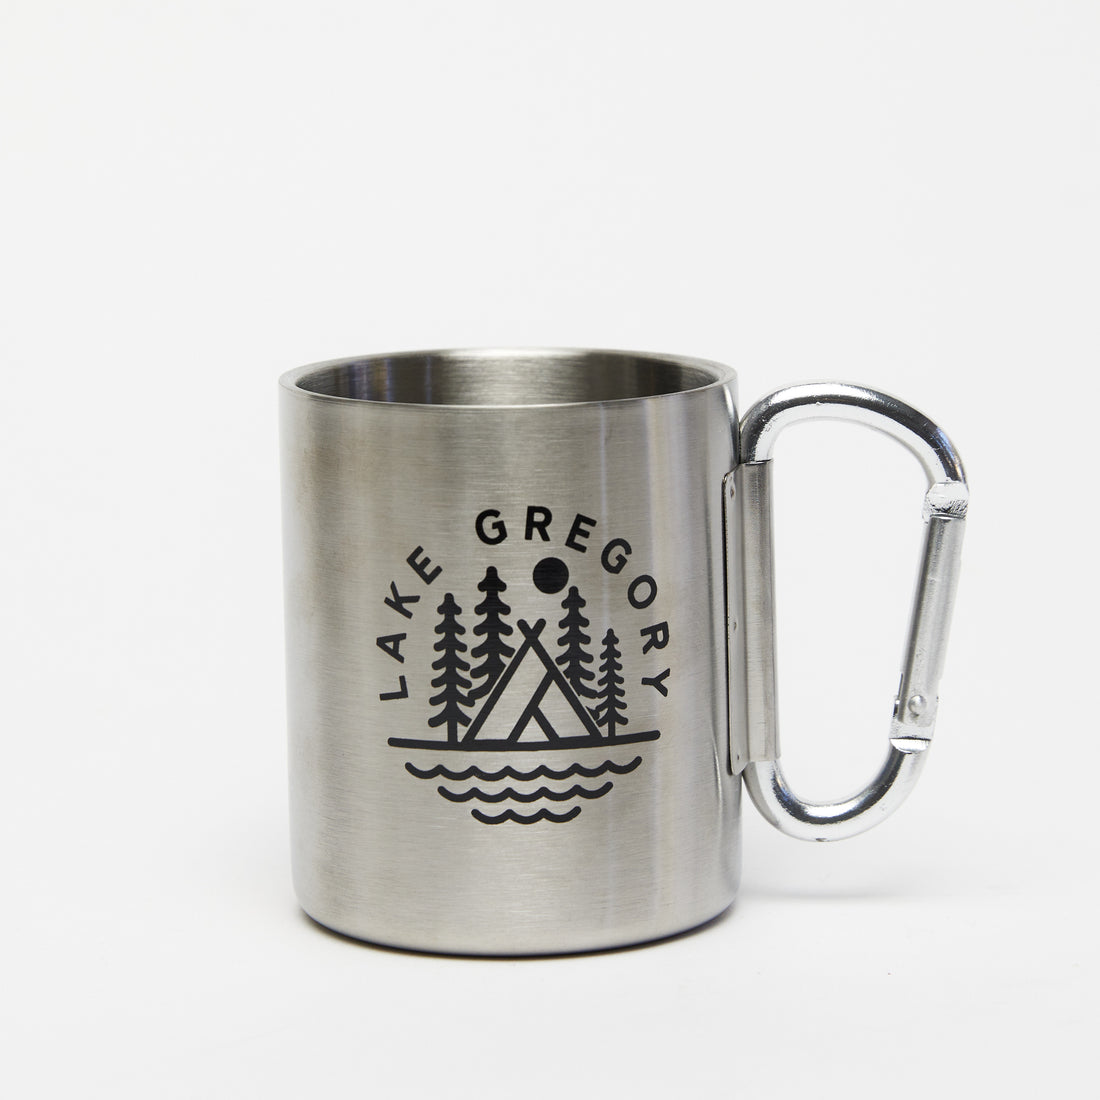 Lake Gregory Carabiner Mug